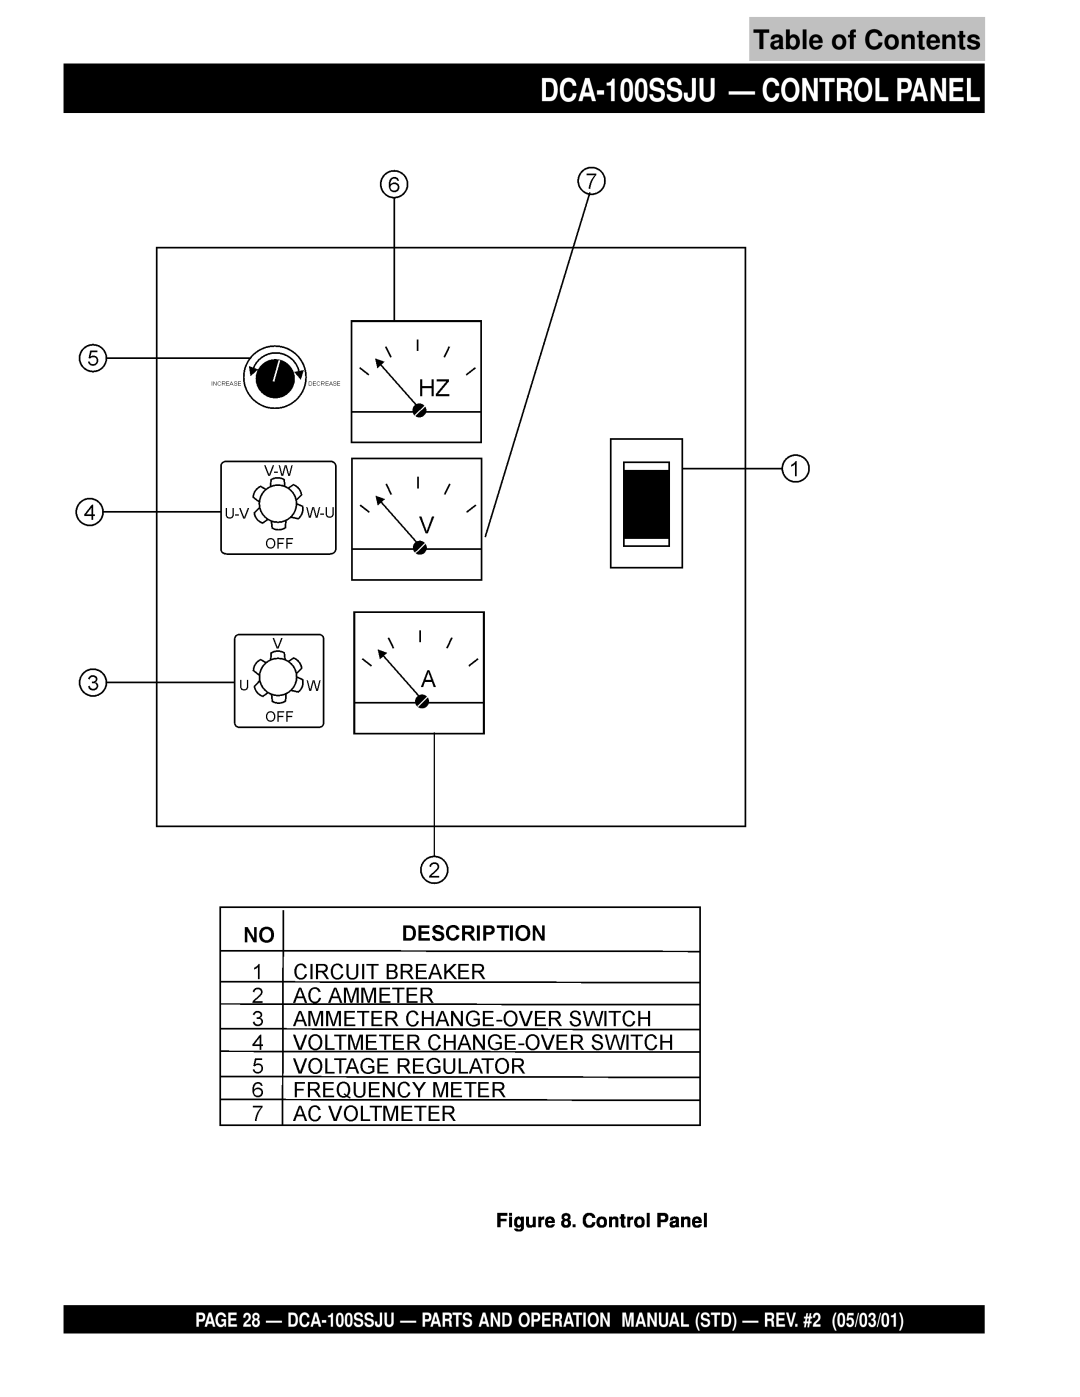 Multiquip operation manual DCA-100SSJU— CONTROL PANEL, Table of Contents, Control Panel 